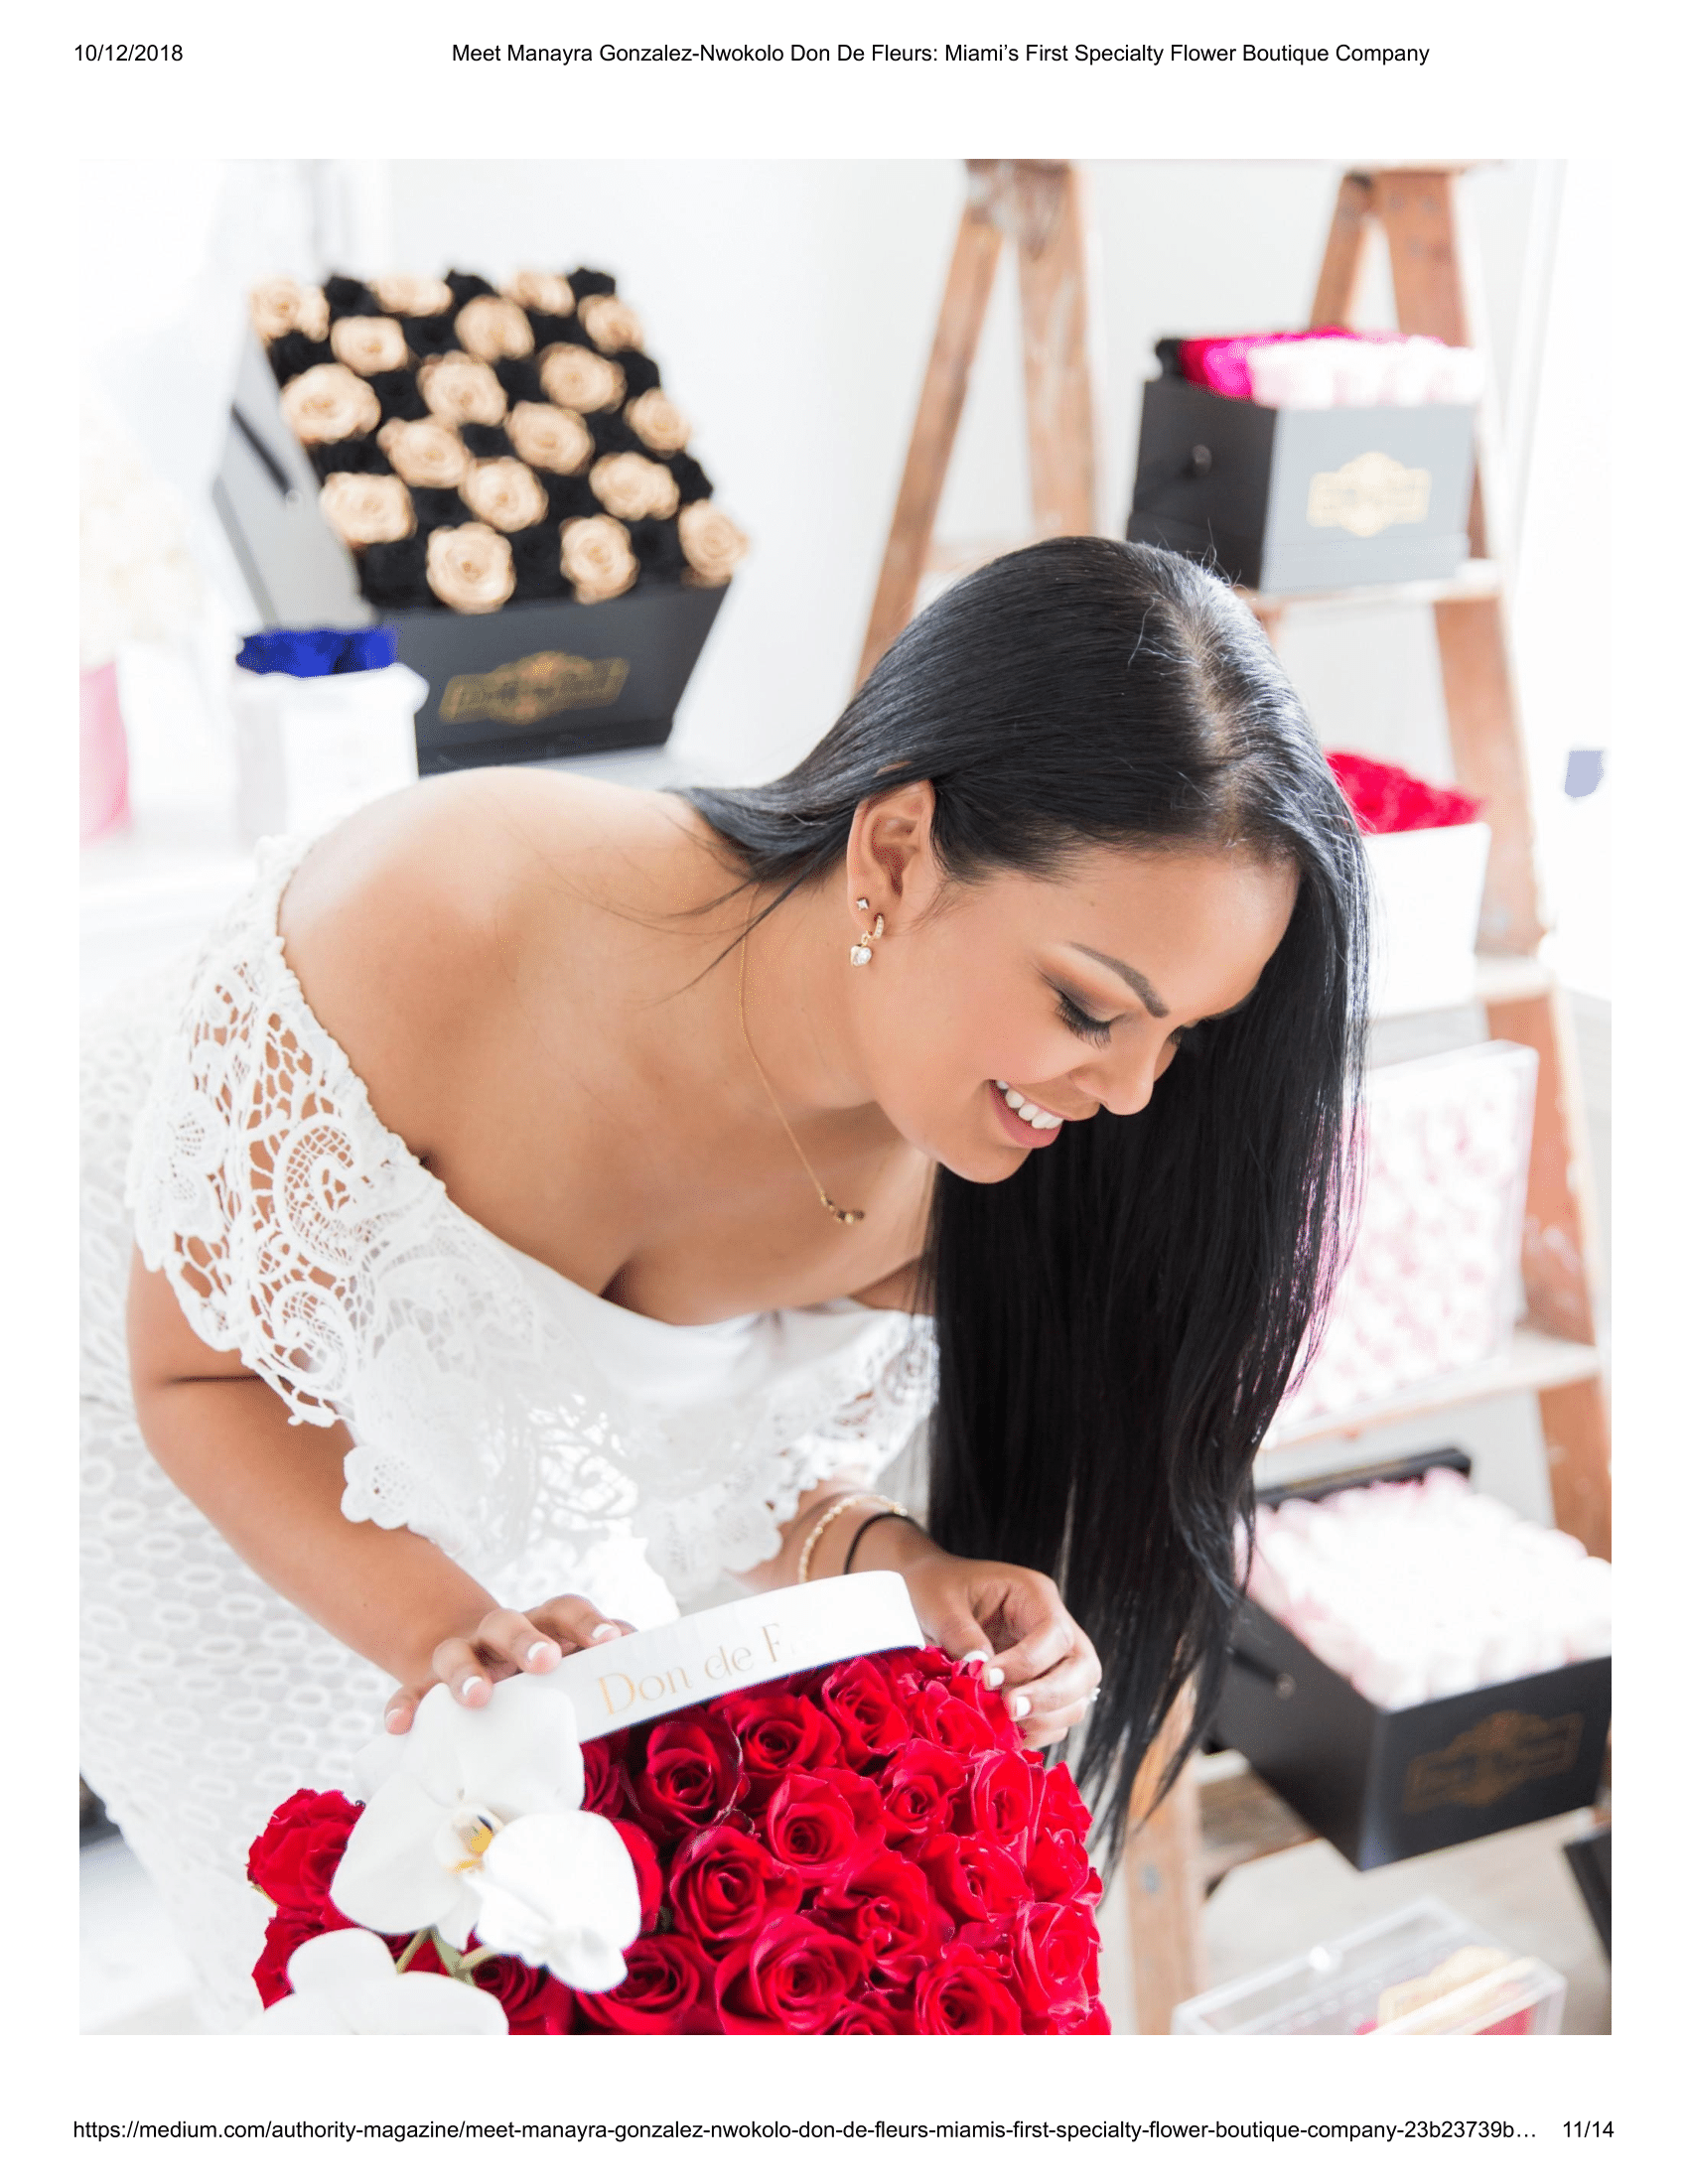 Meet Manayra Gonzalez-Nwokolo Don de Fleurs: Miami's First Speciality Flower Boutique Company